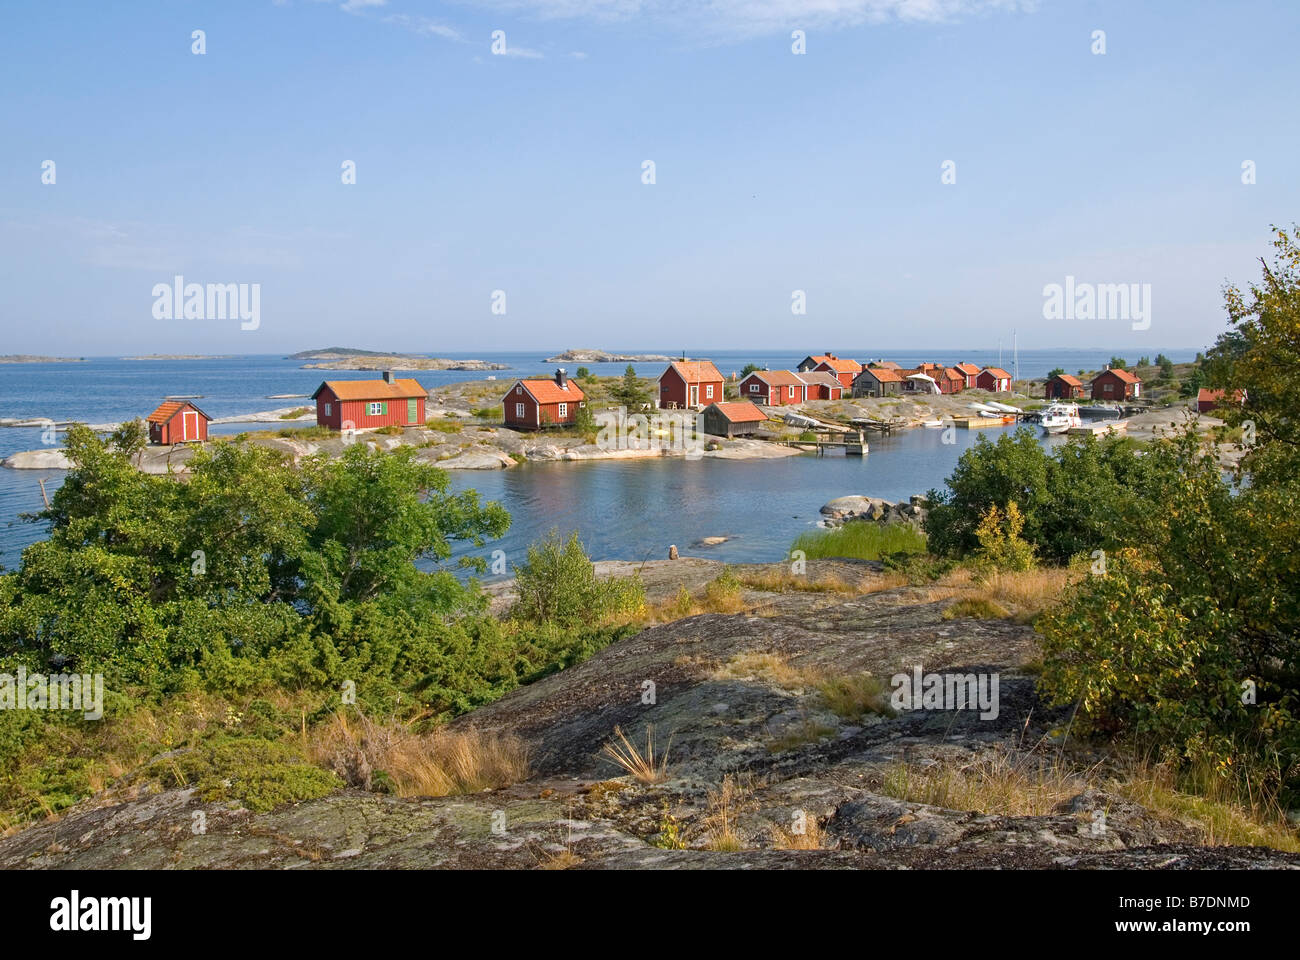 Village of summer houses at Röder in archipelago of Stockholm Stock Photo